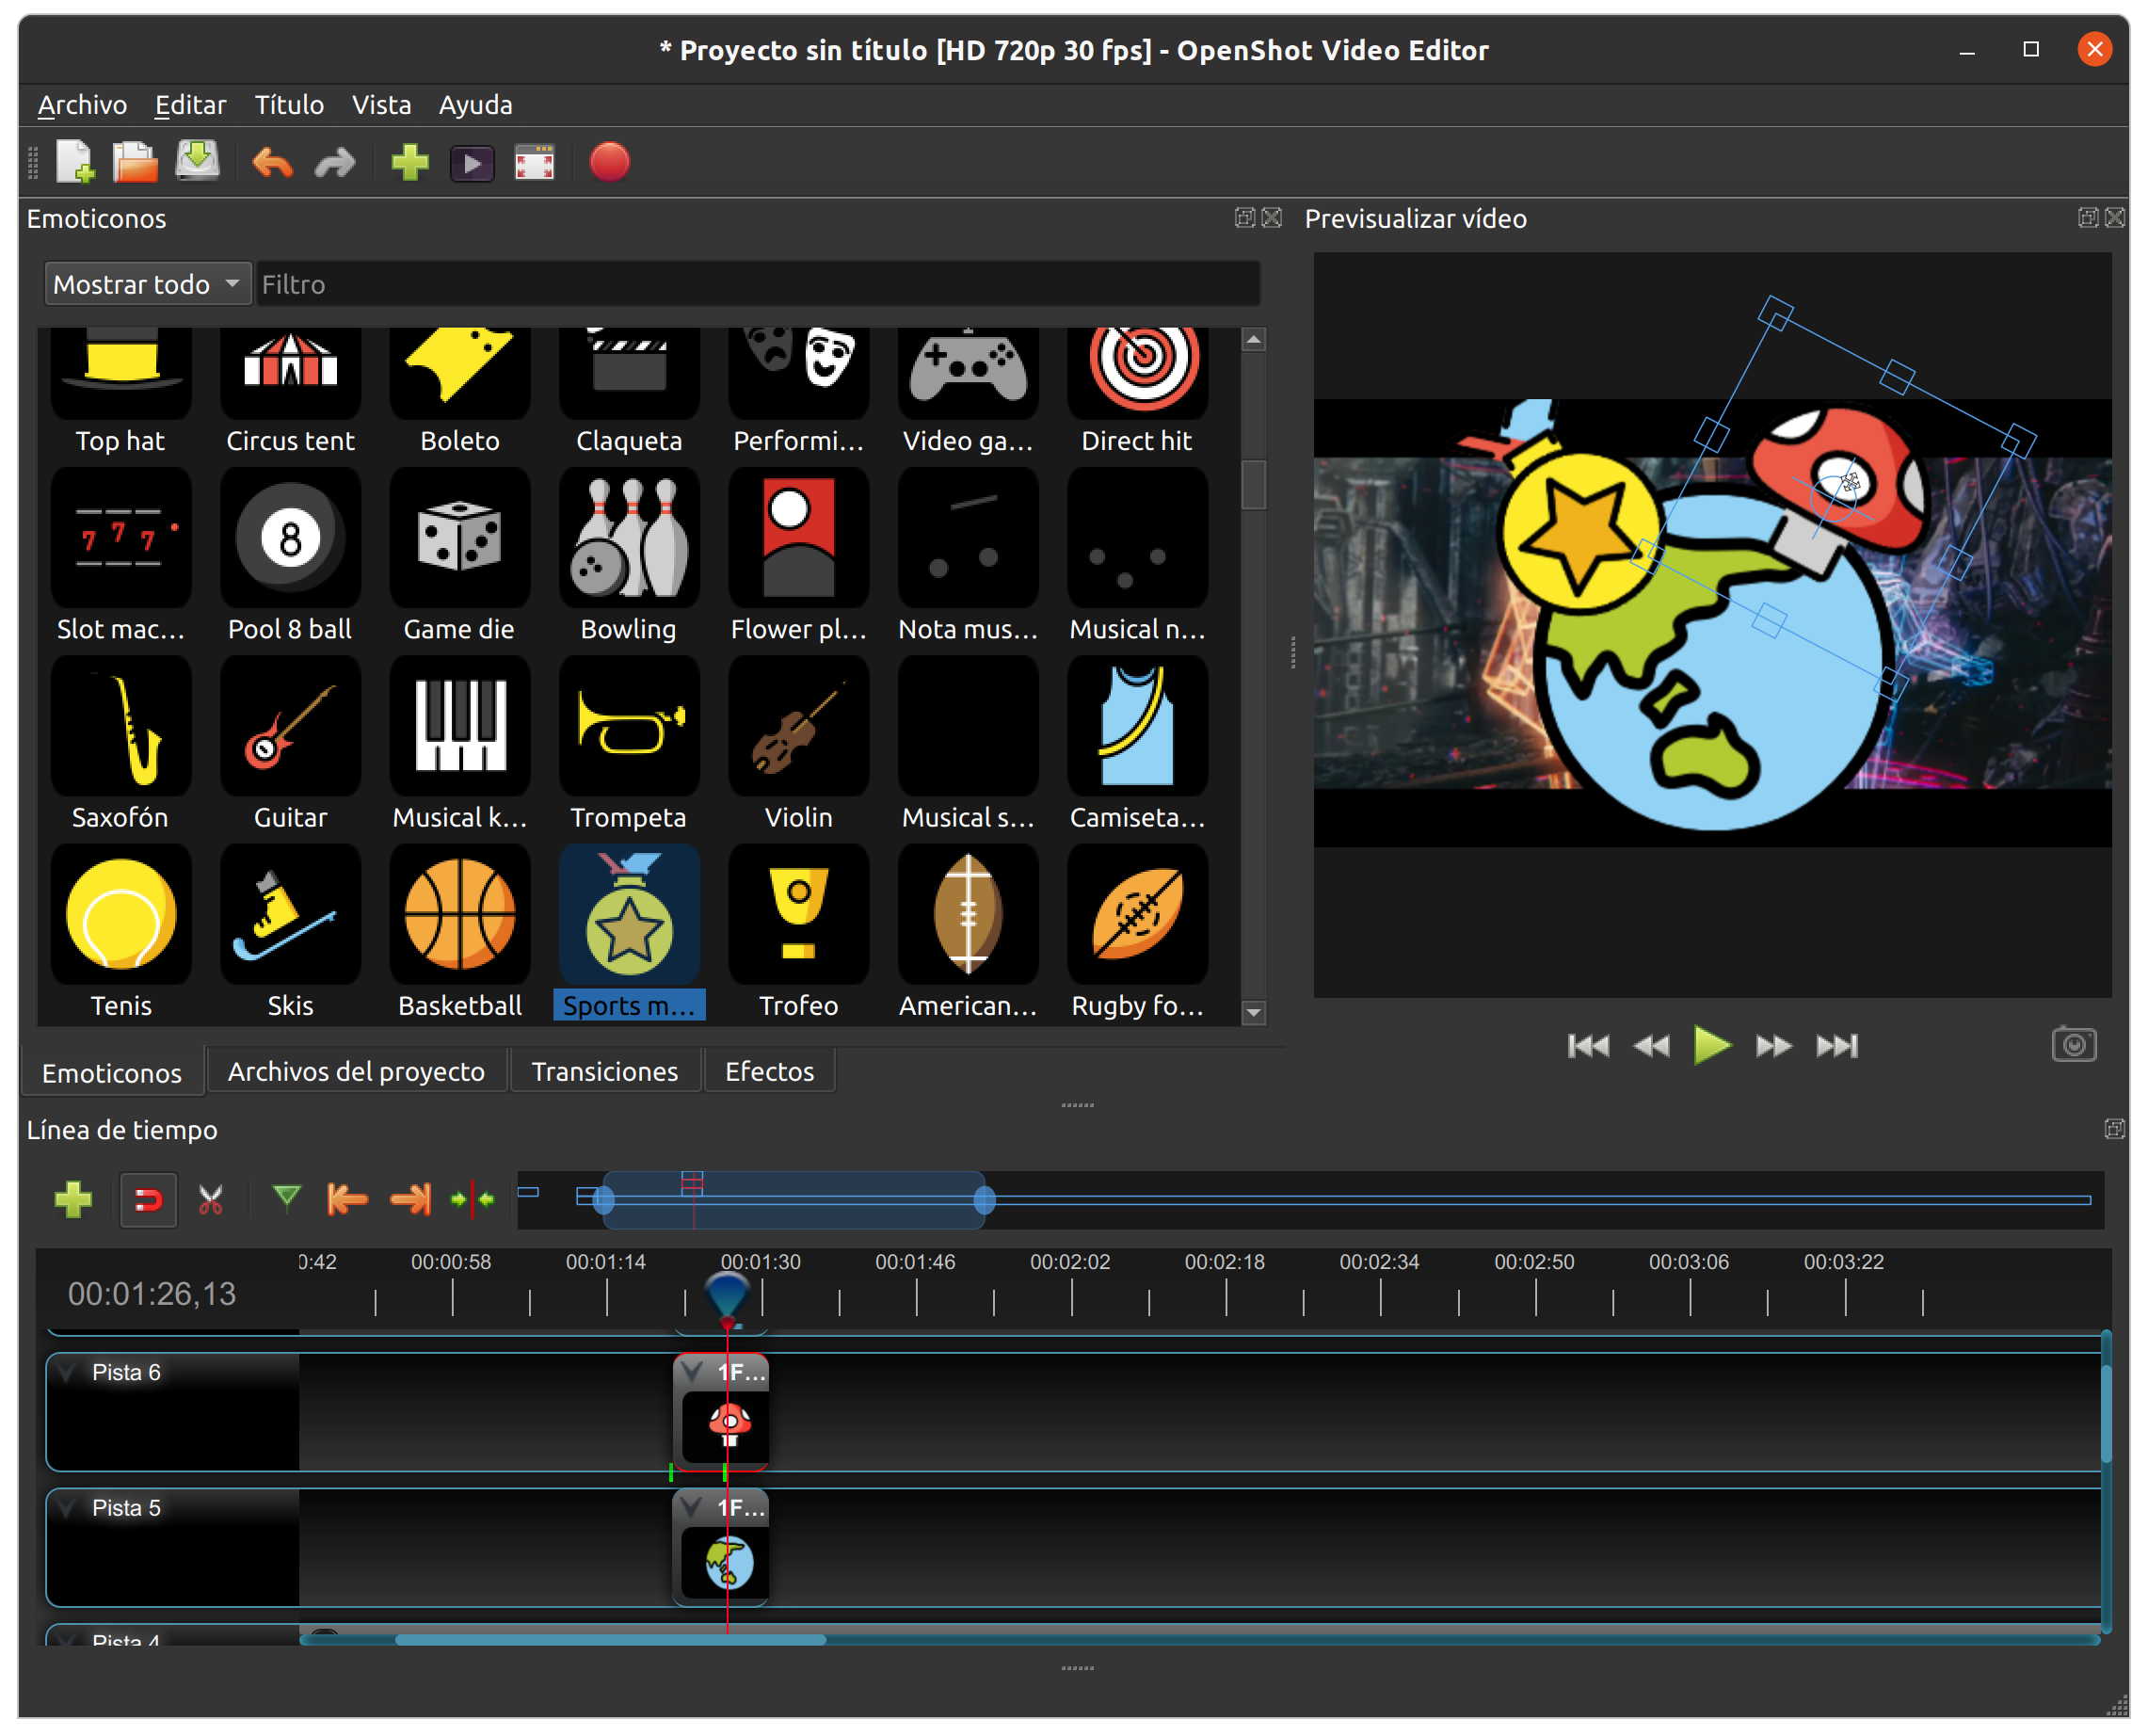 openshot video editor mute track